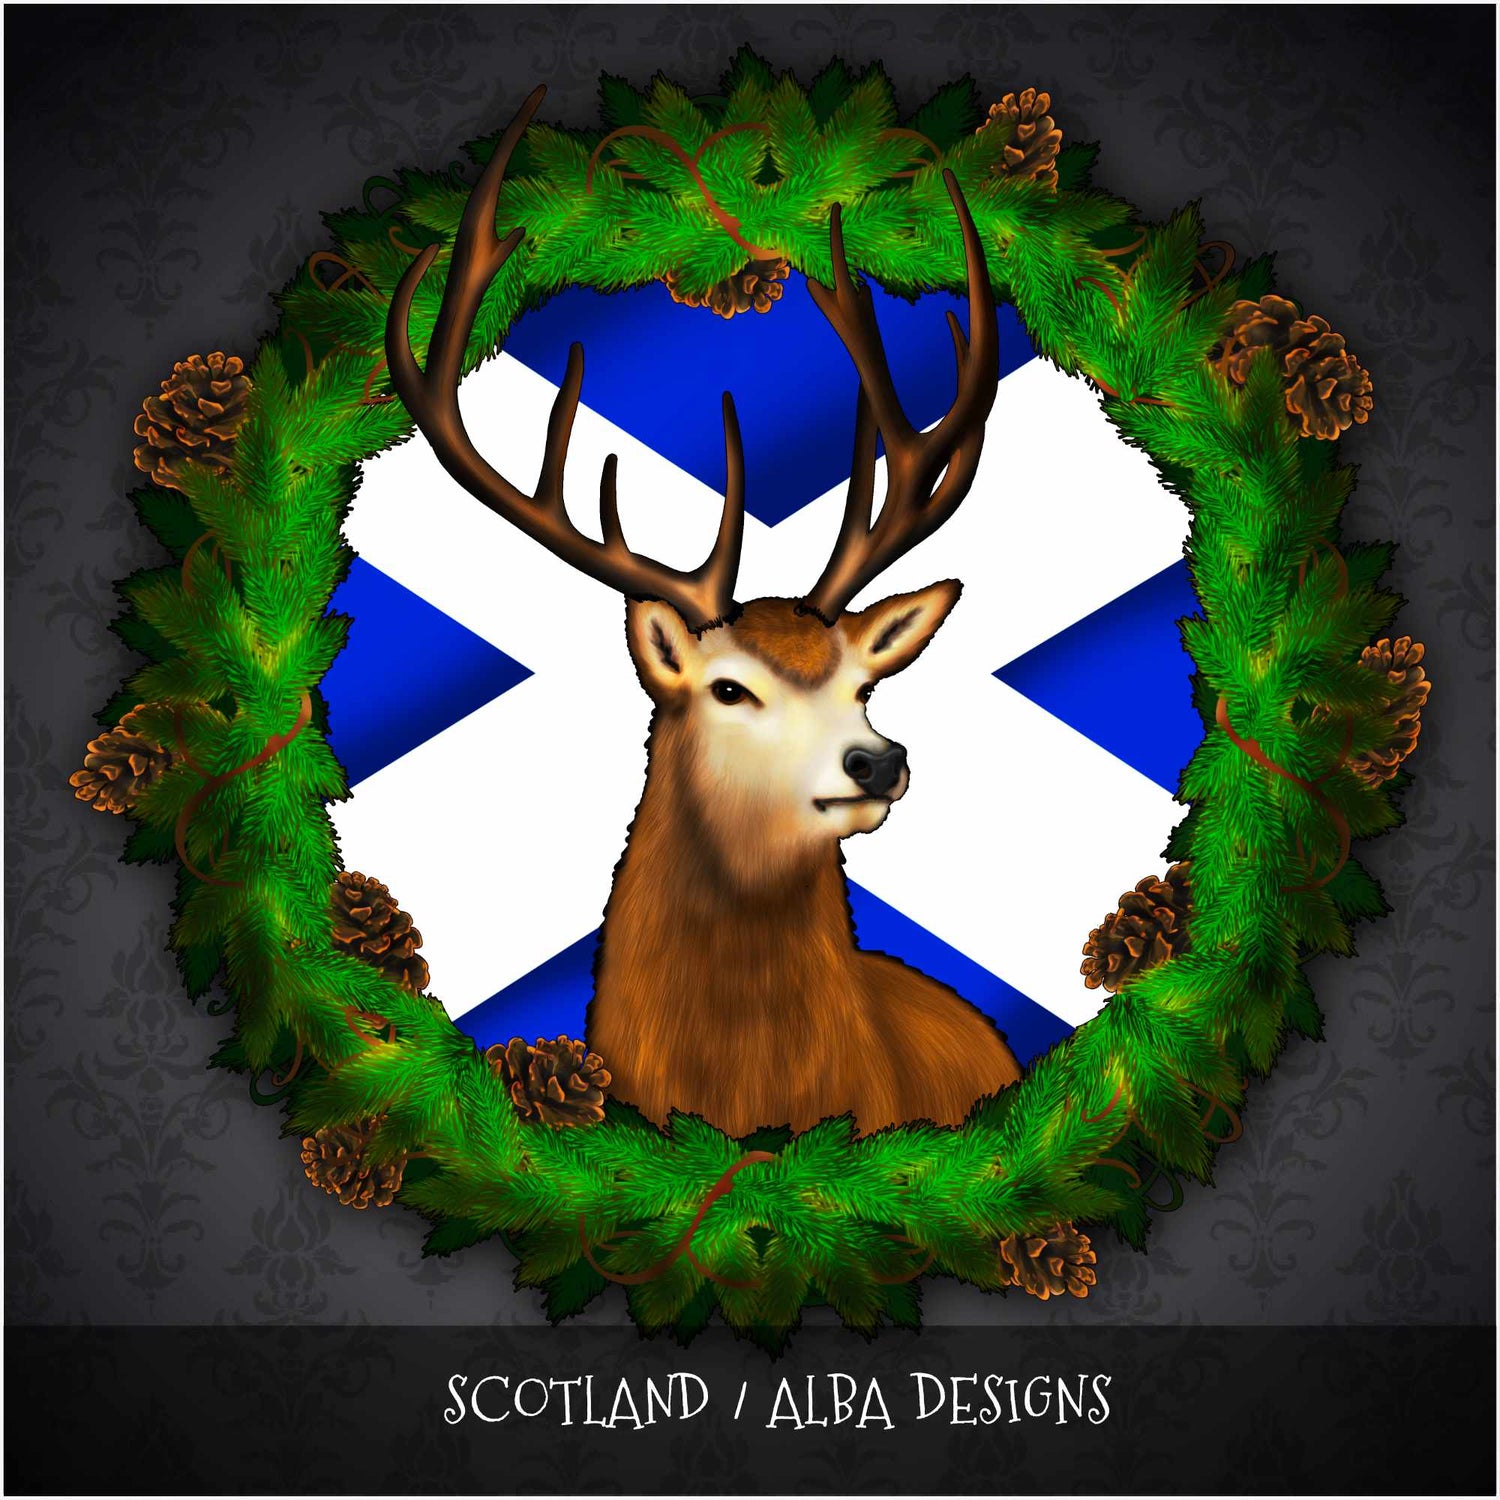 Scotland / Alba Themed Products